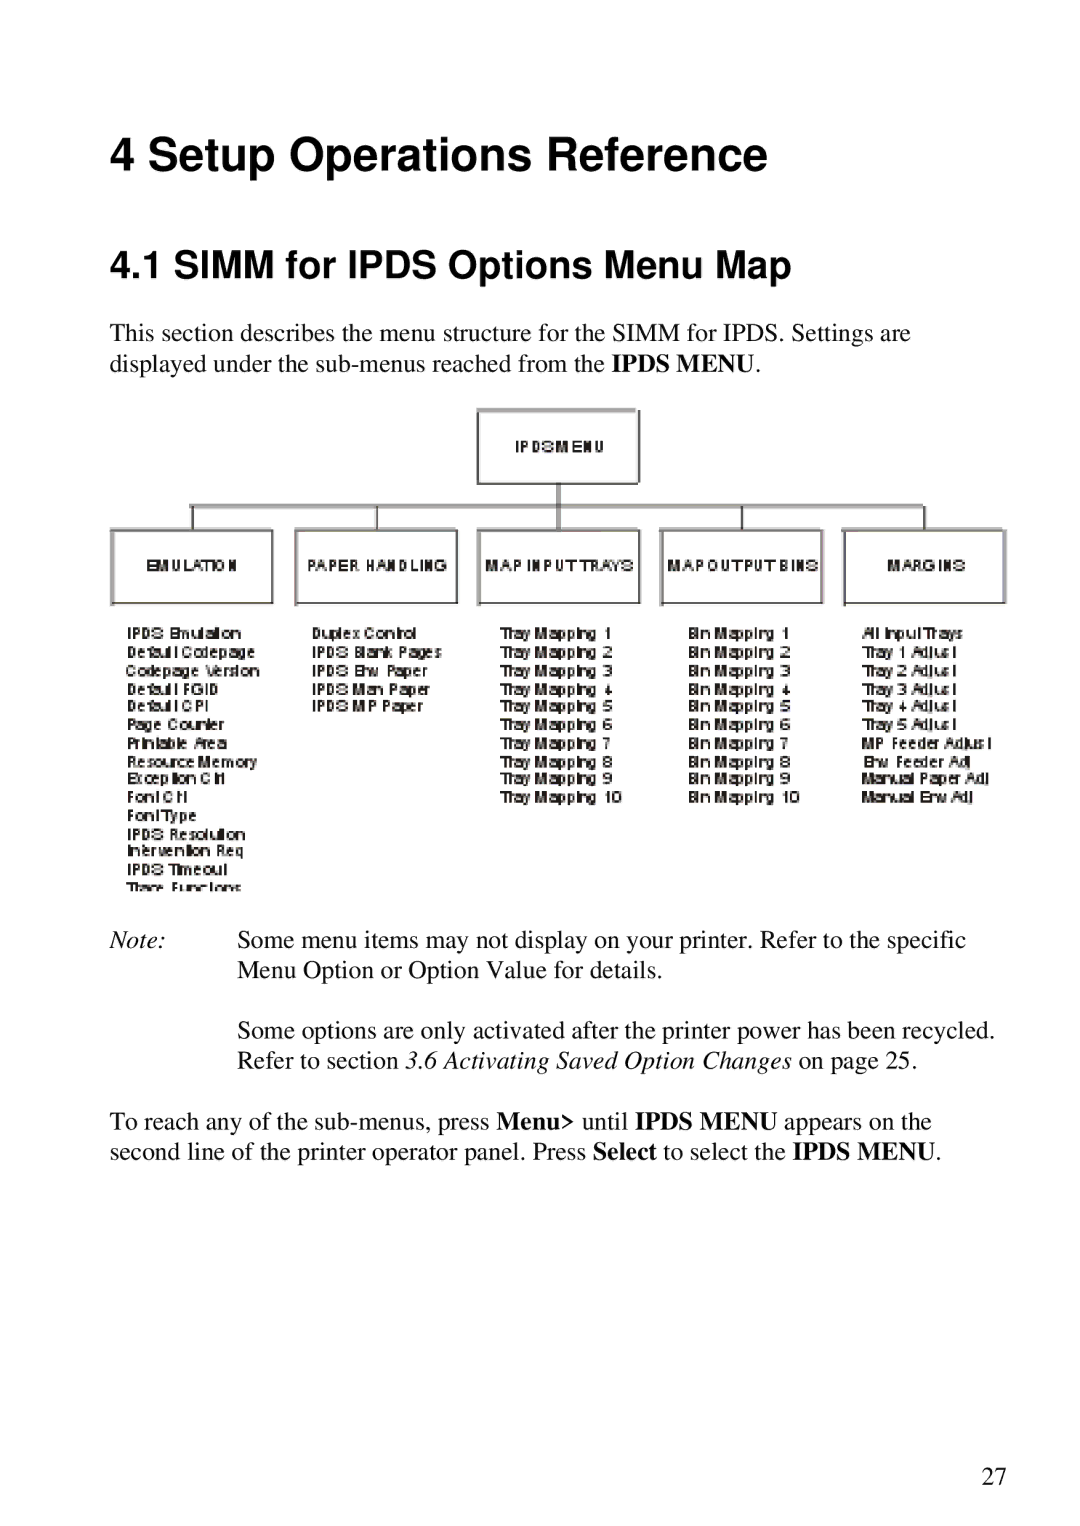 Lexmark Se 3455, K 1220 manual Setup Operations Reference, Simm for Ipds Options Menu Map 